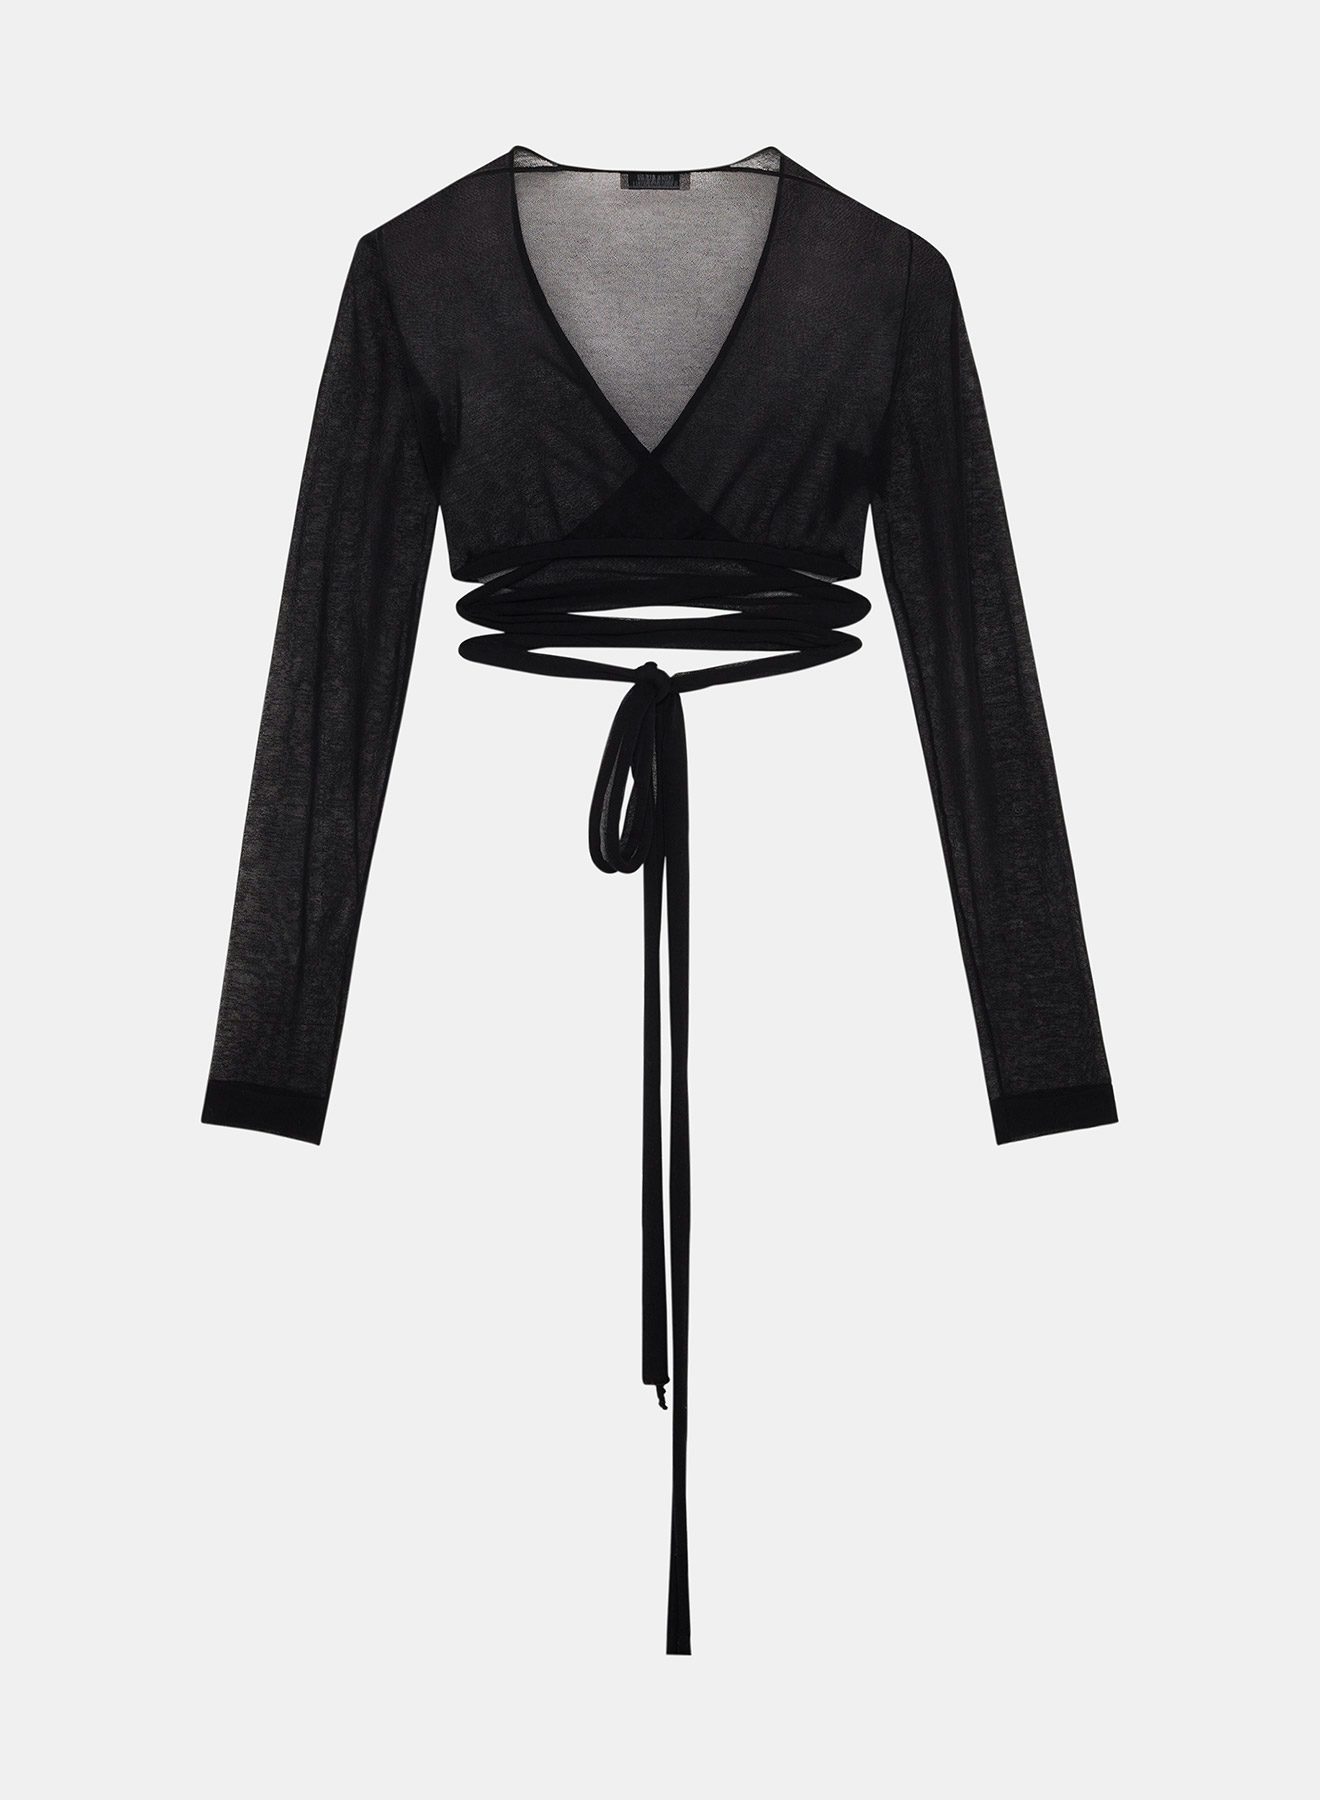 Black knit wrapped top - Nina Ricci